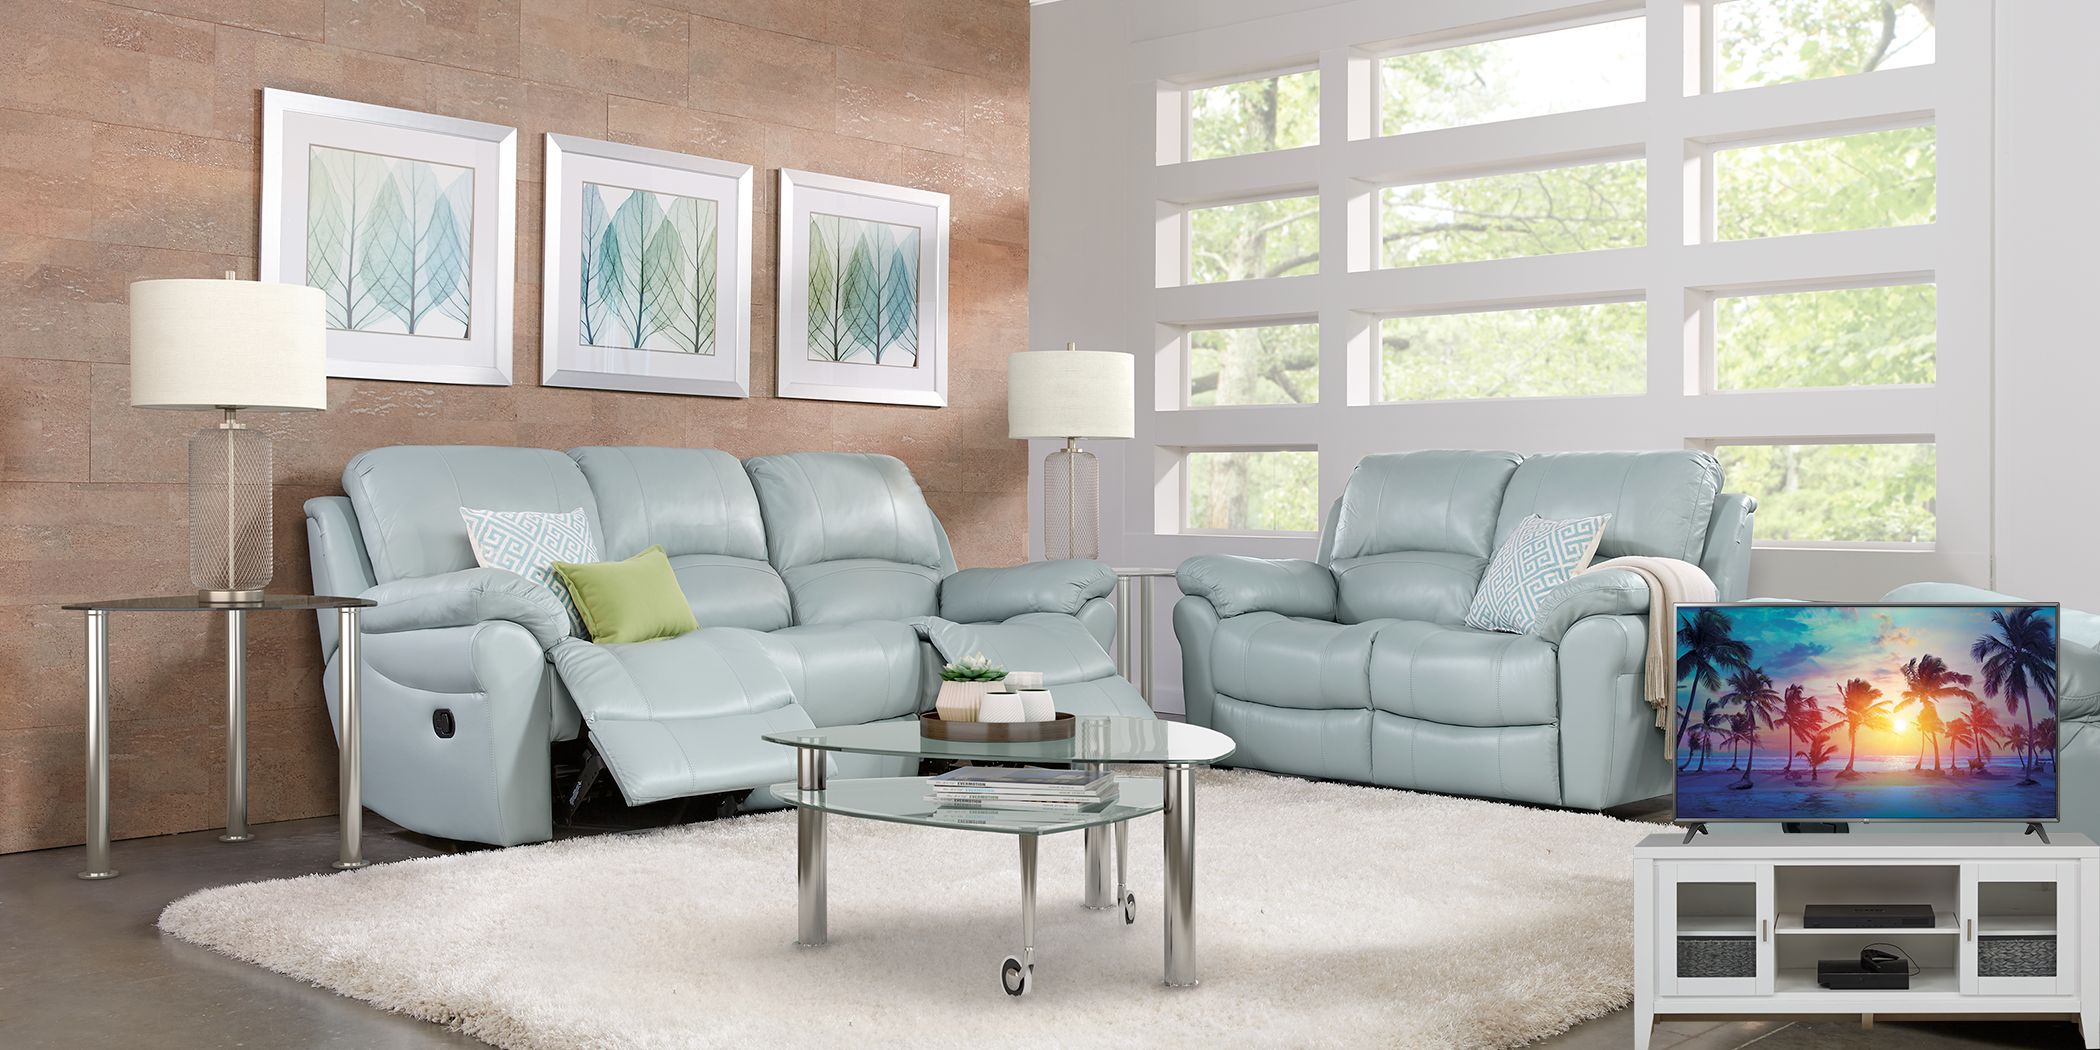 vercelli aqua leather sofa